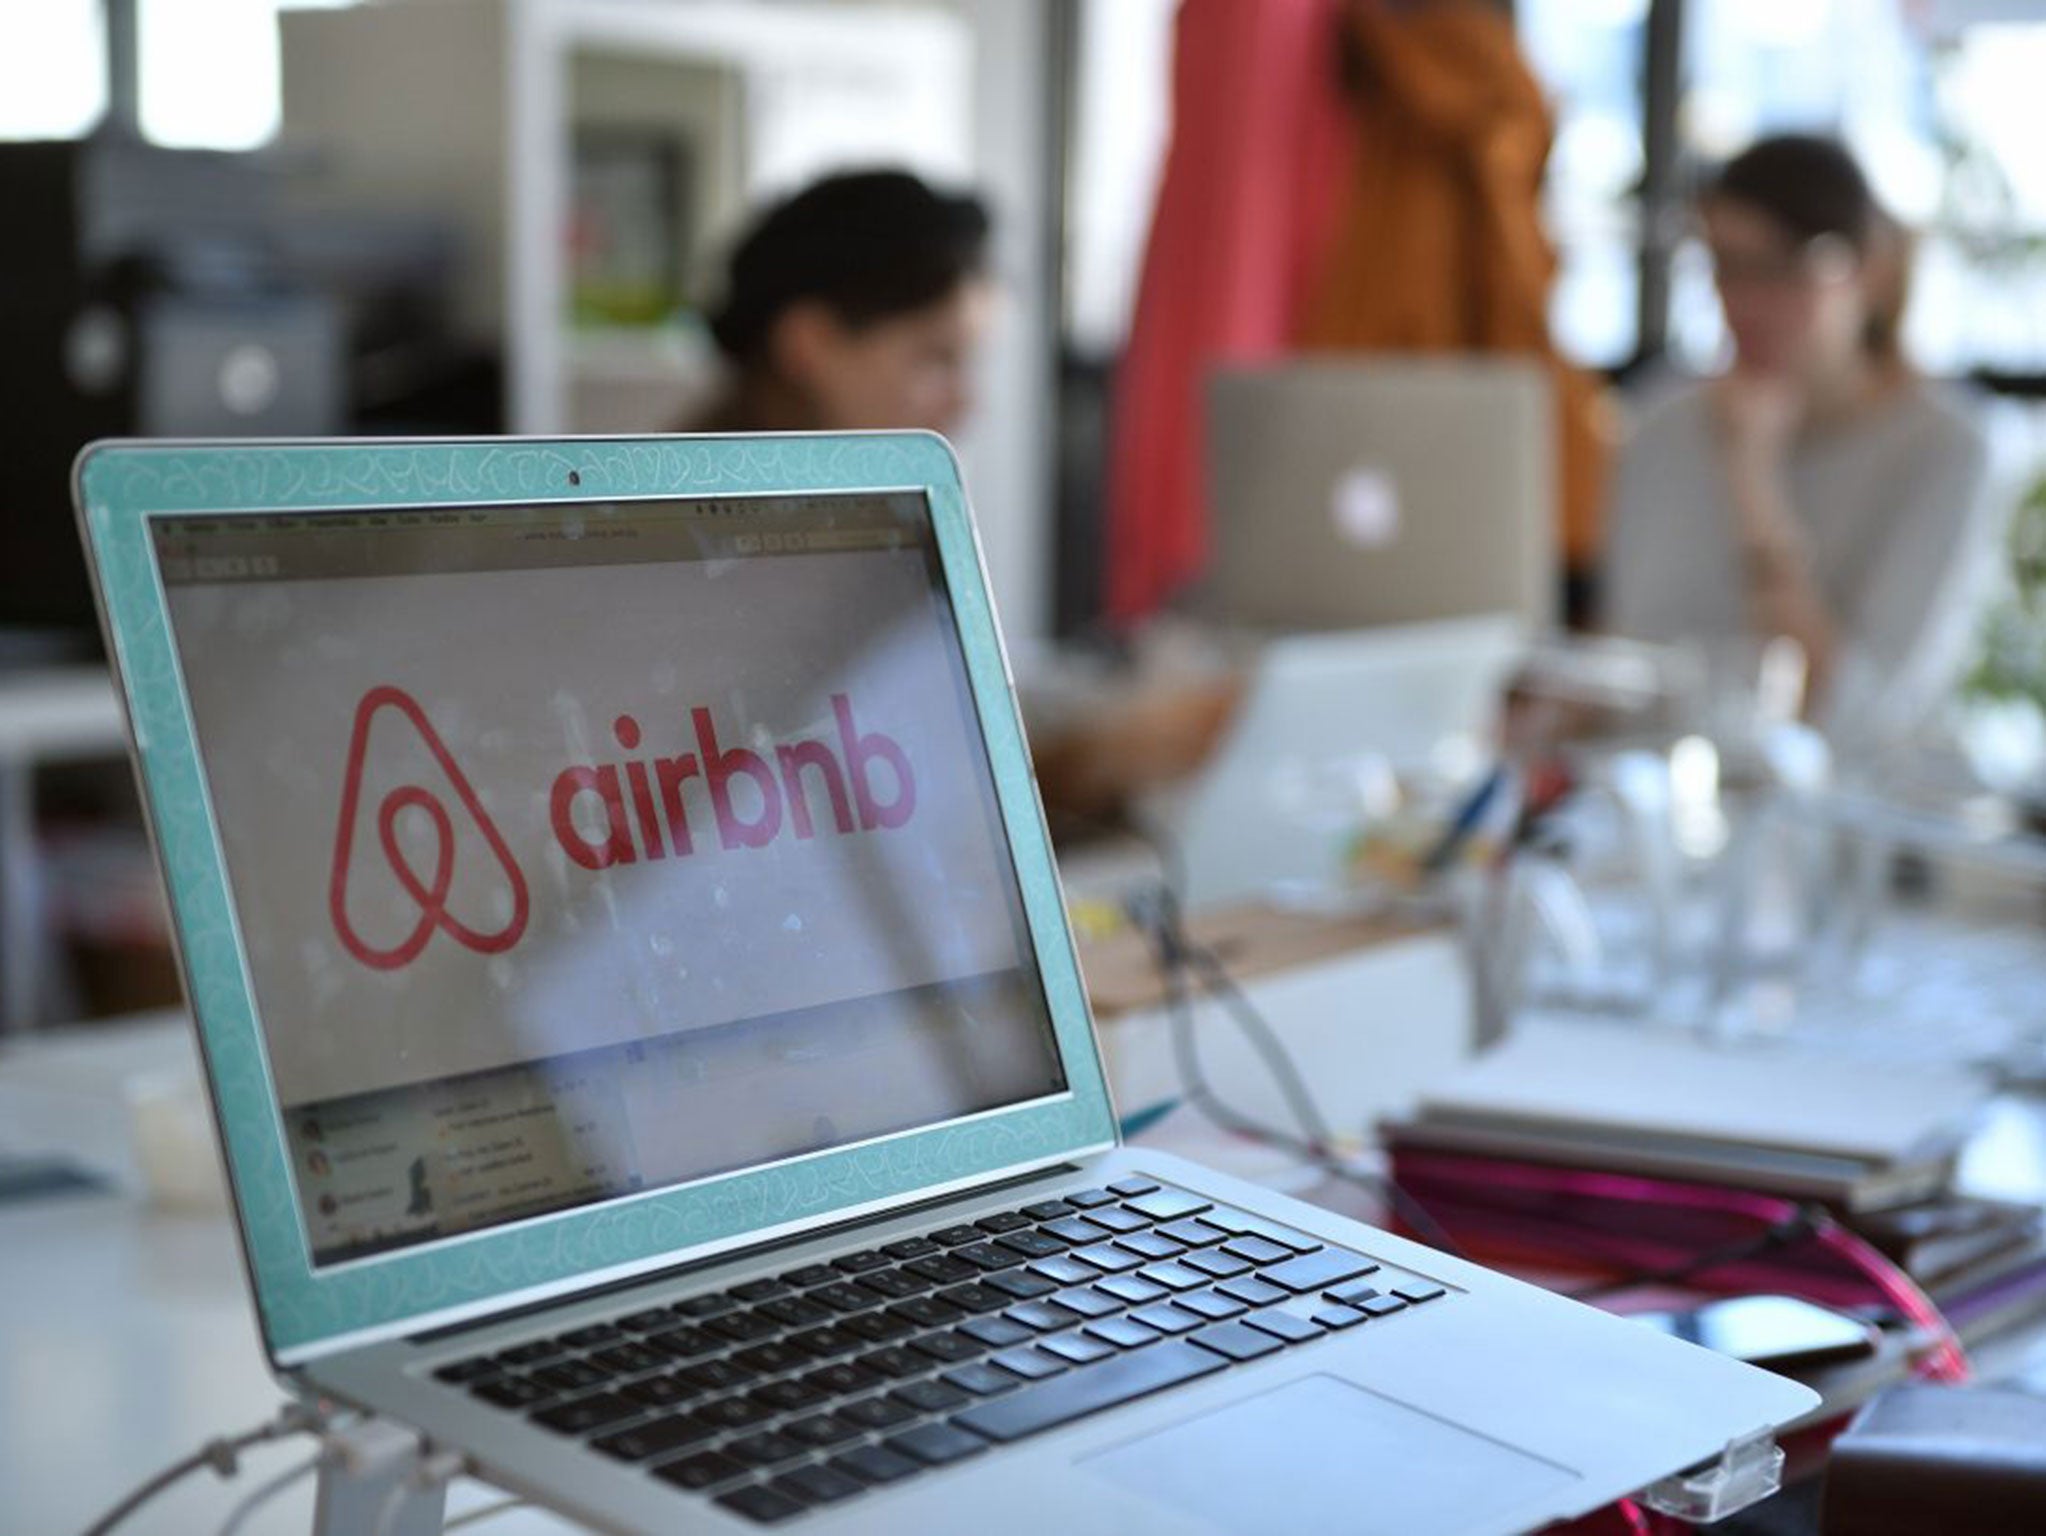 Airbnb has more than 300 listings across Ukraine